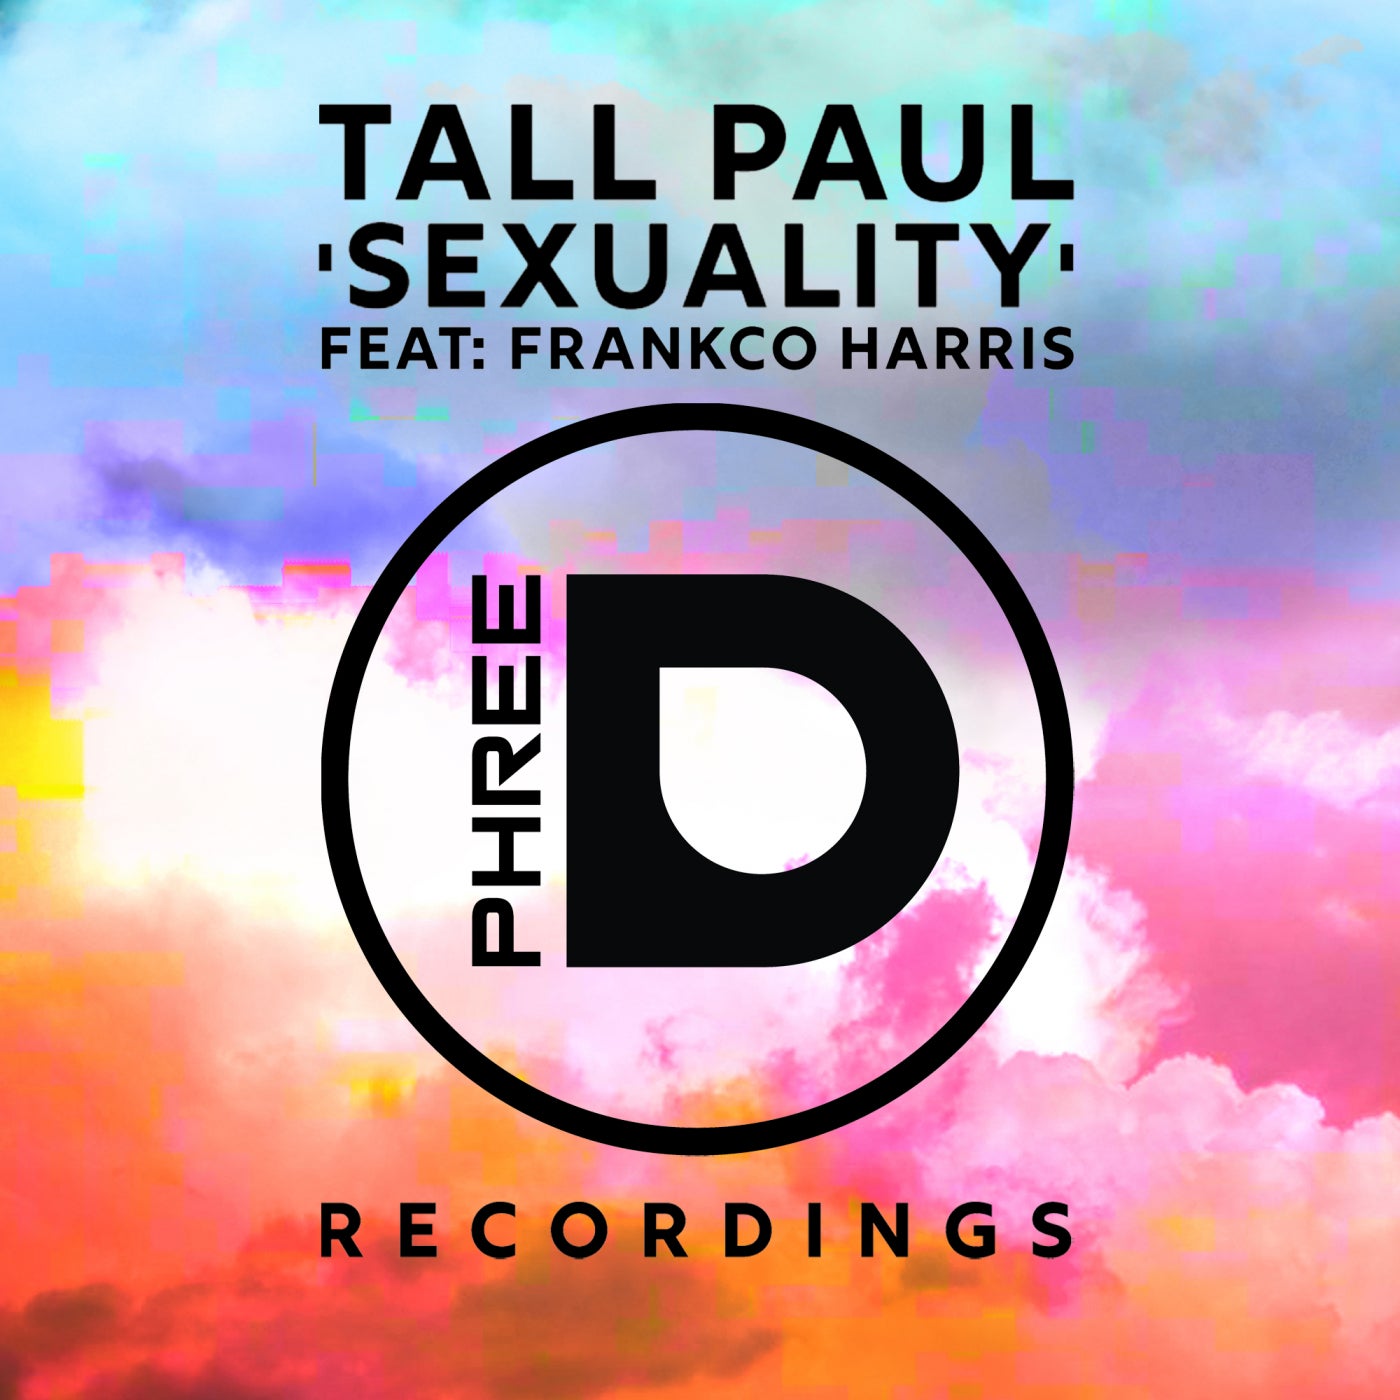 Tall Paul feat. Franko Harris - Sexuality (Tall Paul Remix)